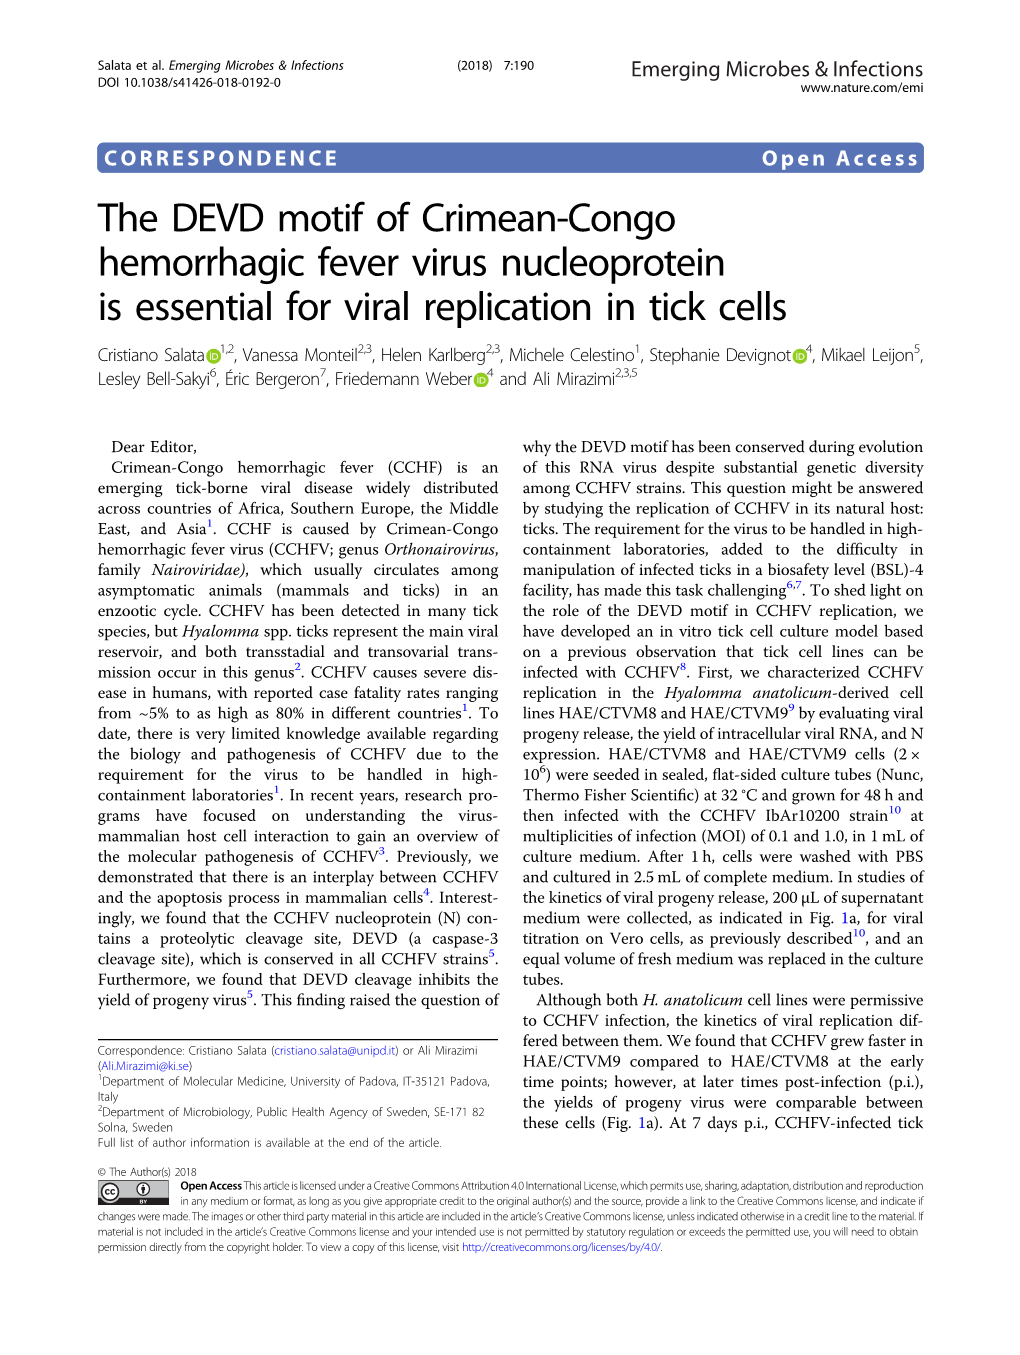 The DEVD Motif of Crimean-Congo Hemorrhagic Fever Virus